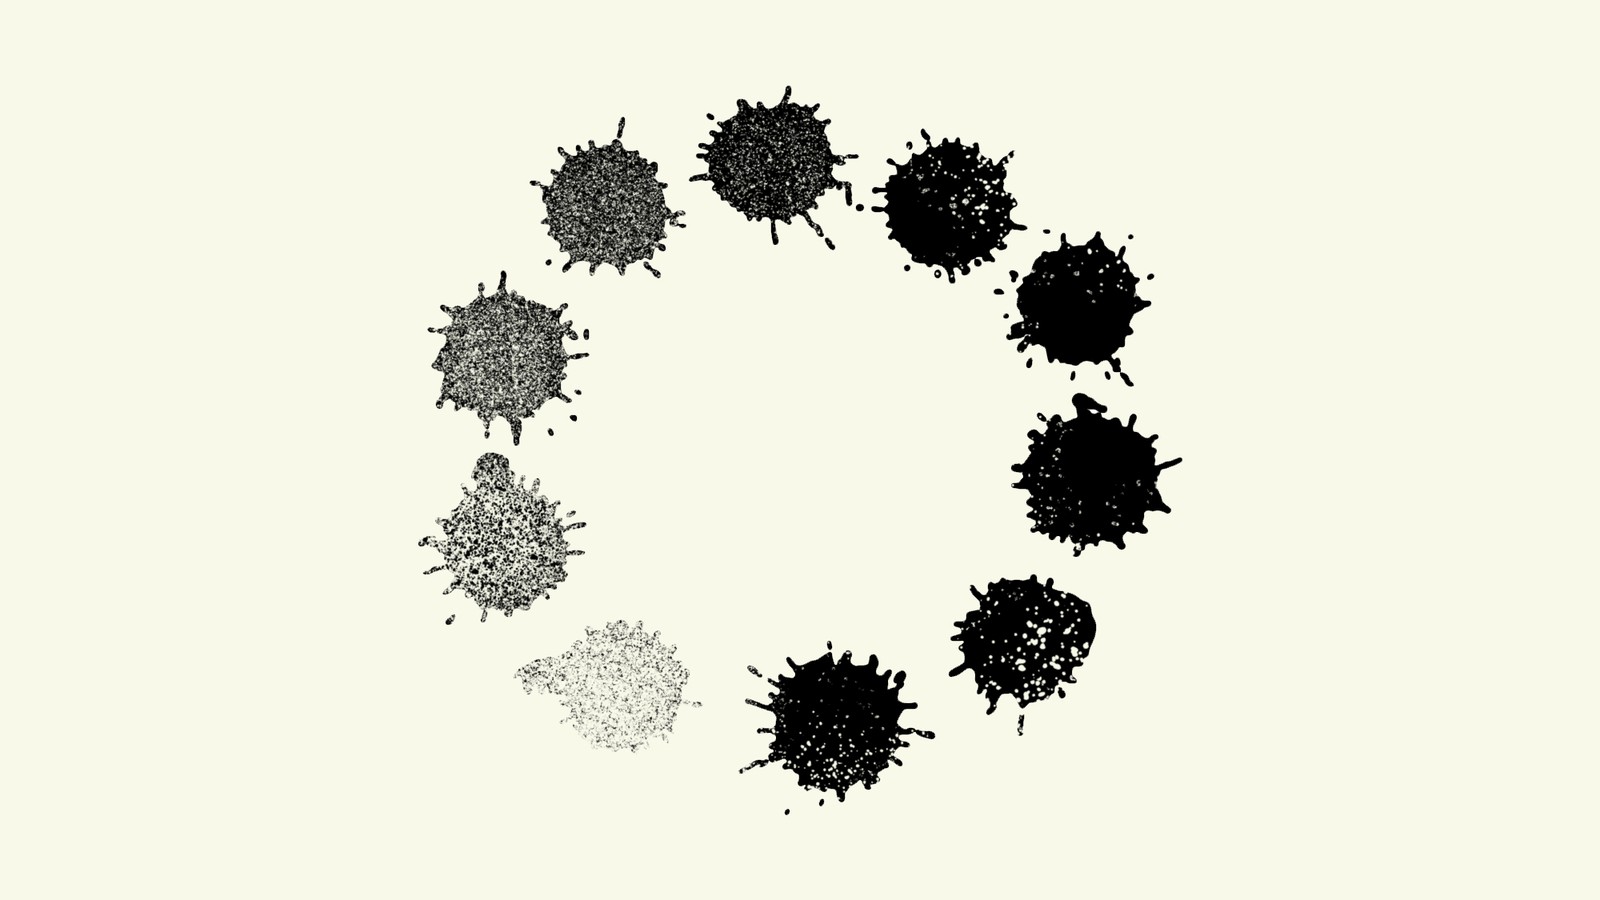 I study viruses: How our team isolated the new coronavirus to